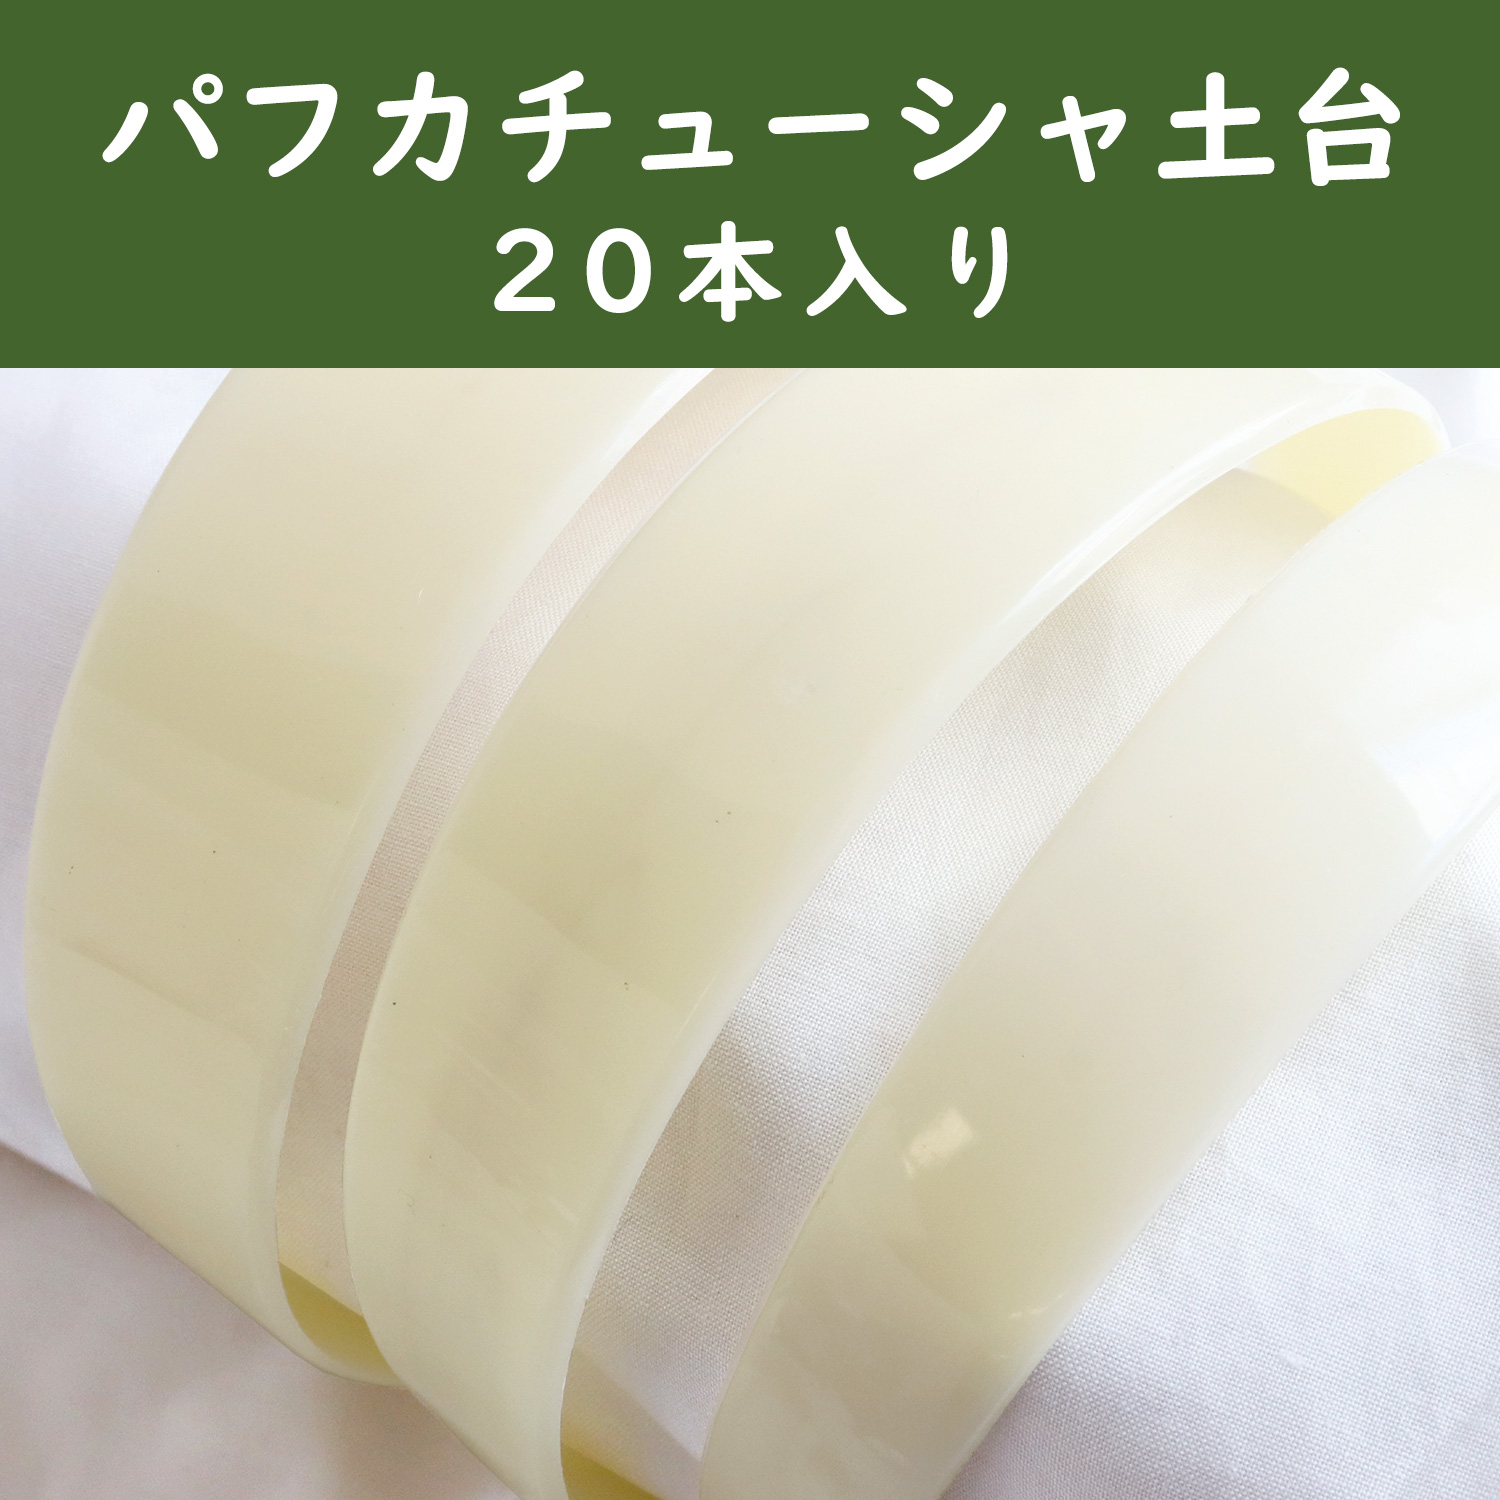 A5-118～120-20 Headband base White 20pcs (pack)